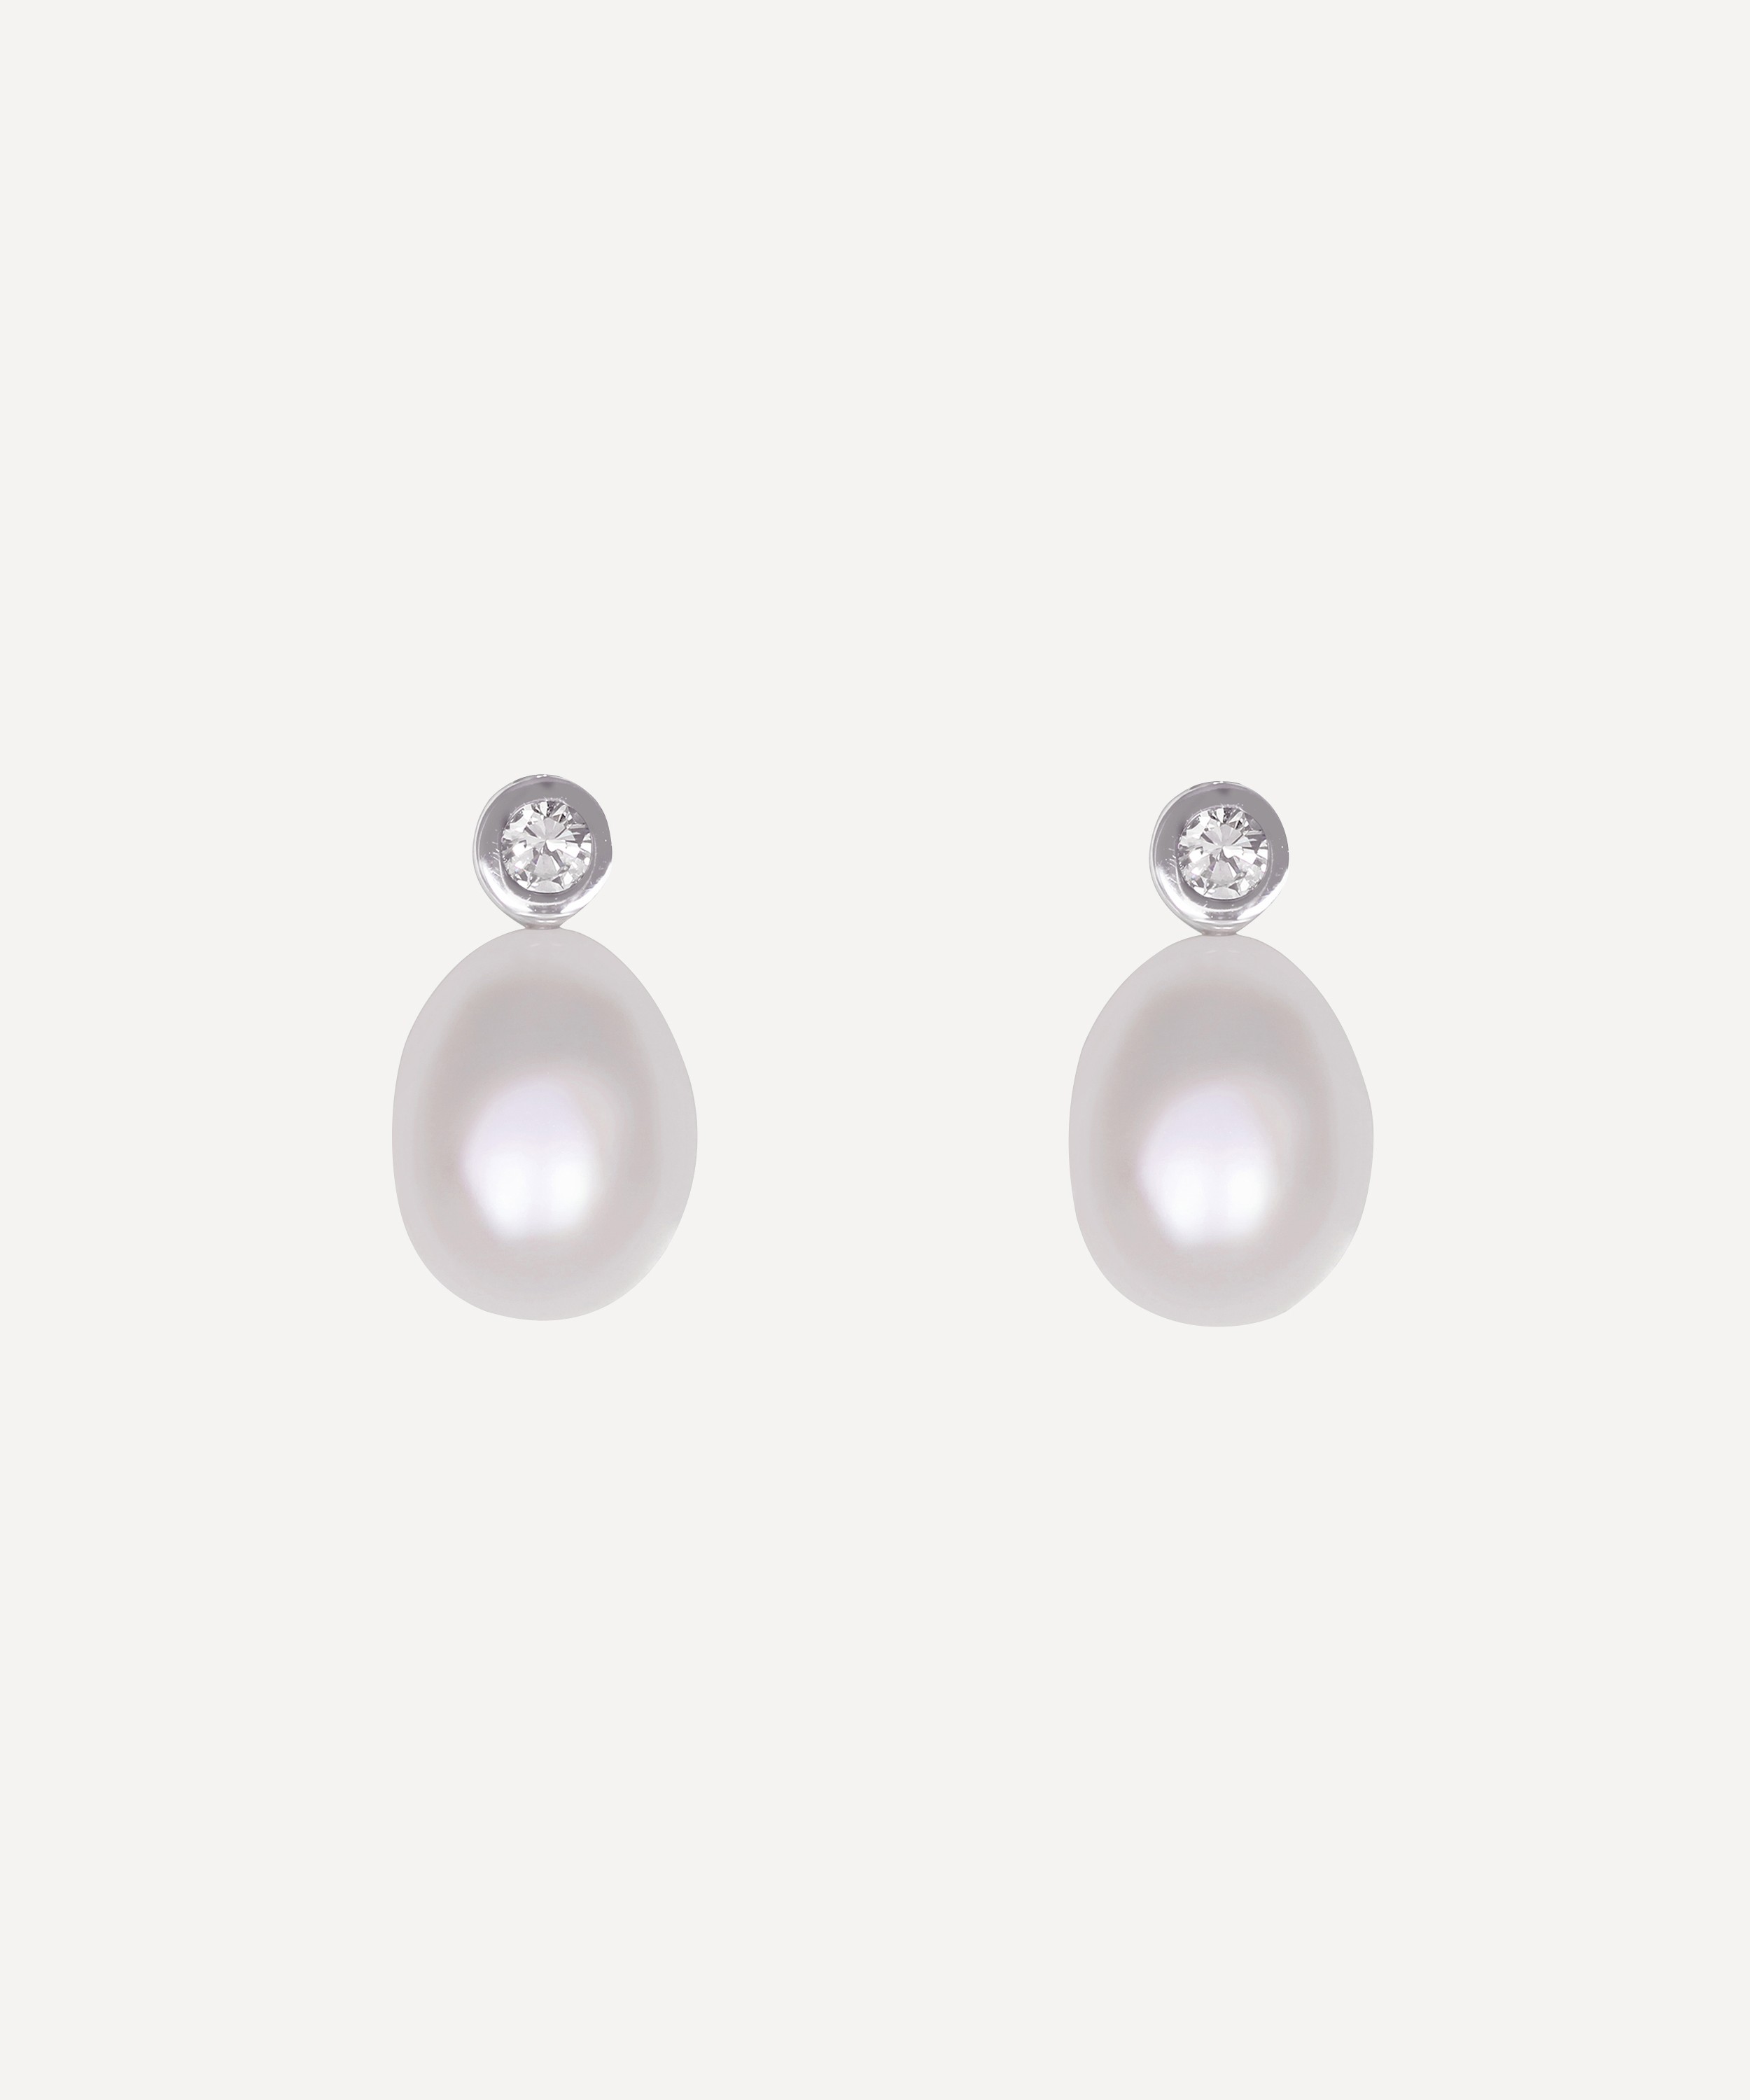 Kojis - White Gold Pearl and Diamond Drop Earrings